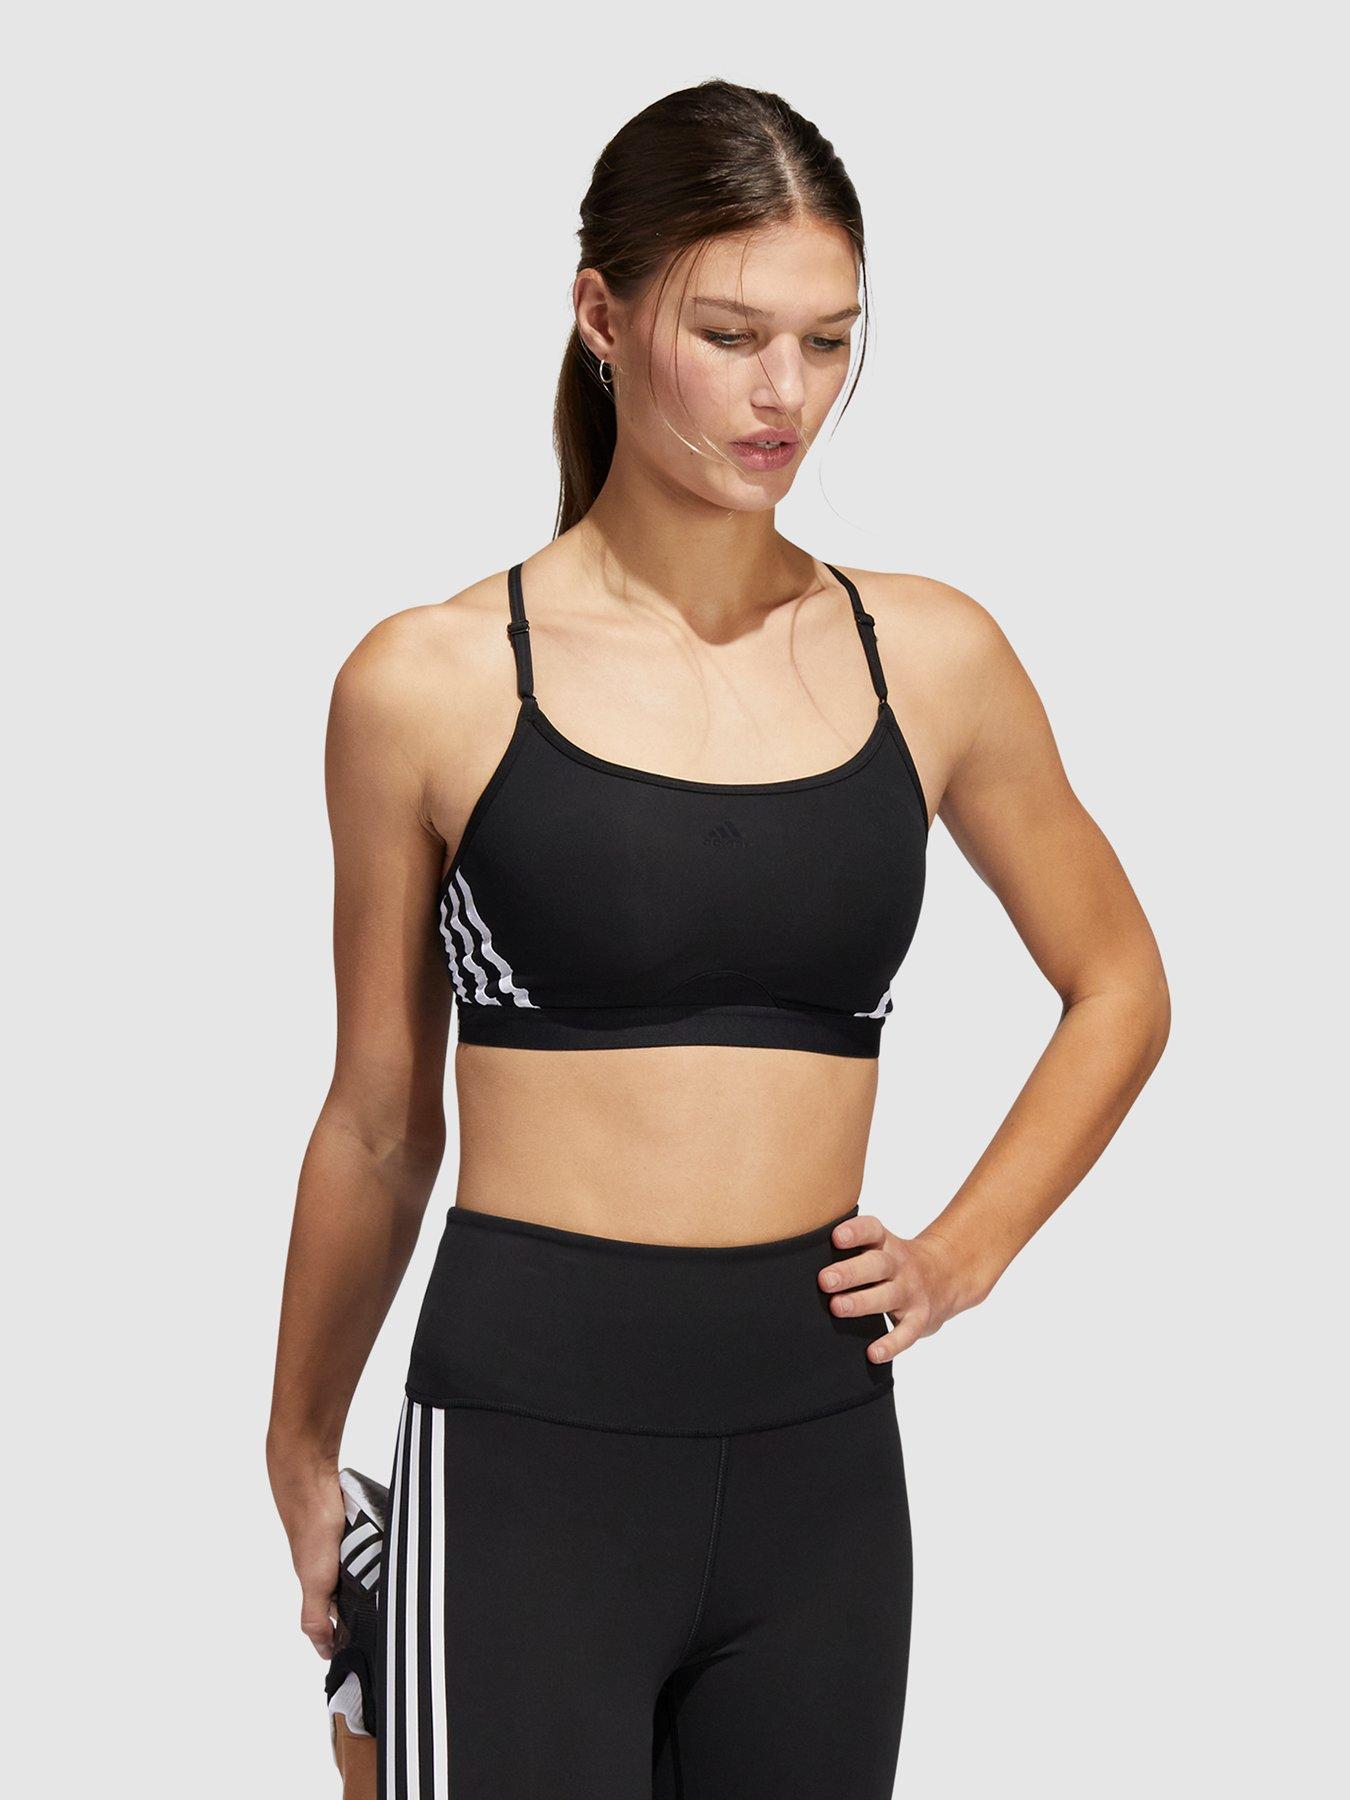 adidas Women's Tech-Fit Sports Bra - Medium Support - Black